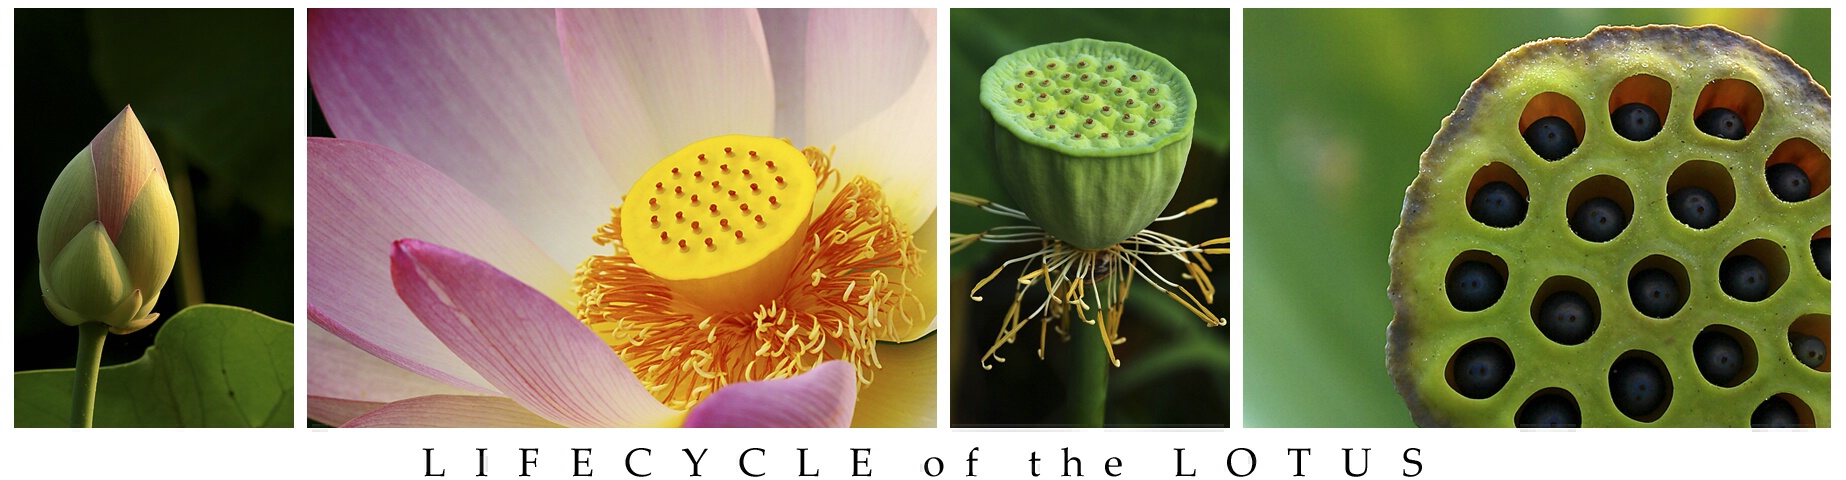 Lotus Lifecycle